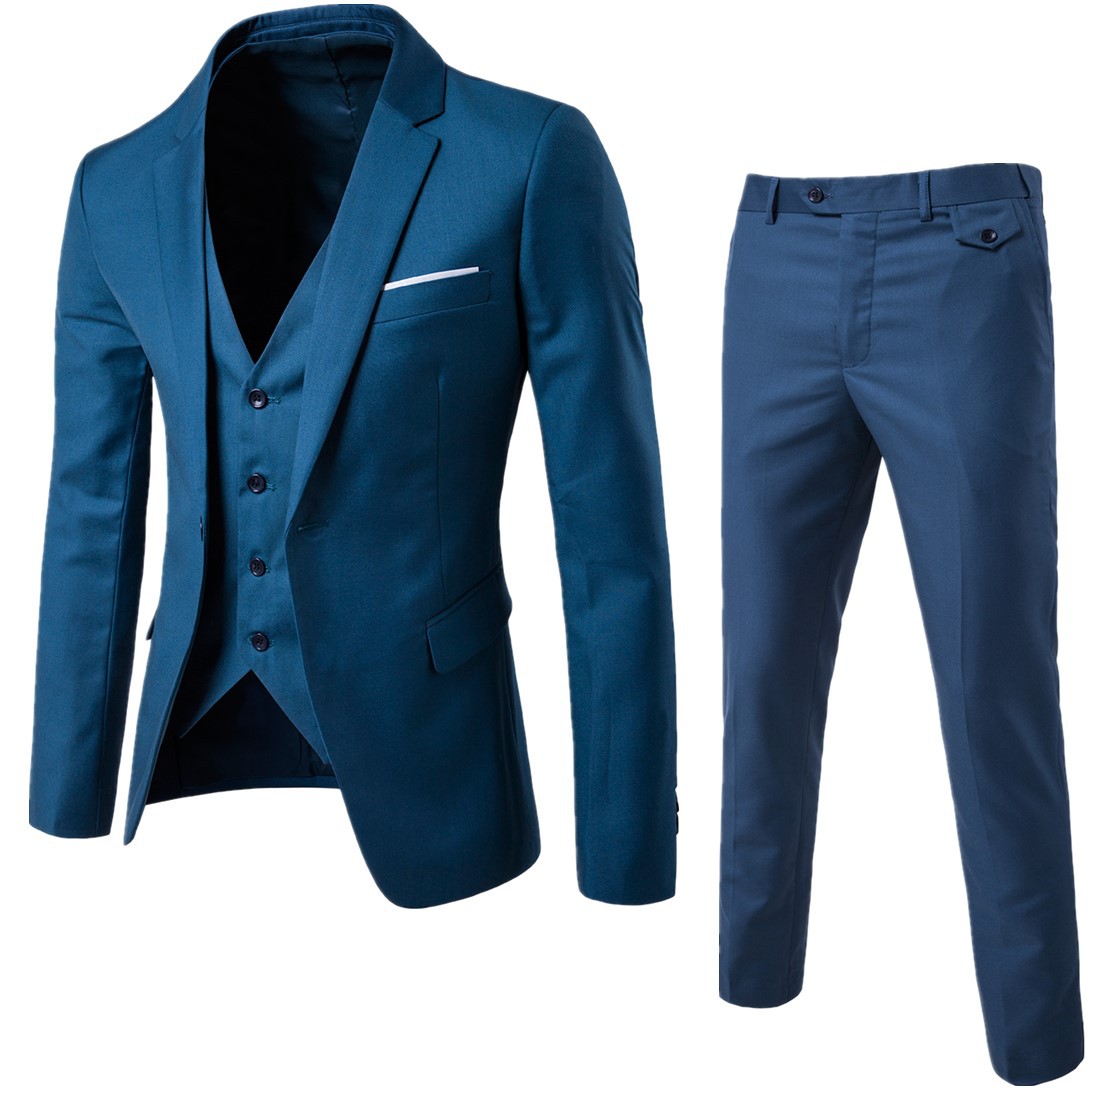 Men's three piece suit 2019 four season leisure fit suit one button business three piece suit one hair substitute